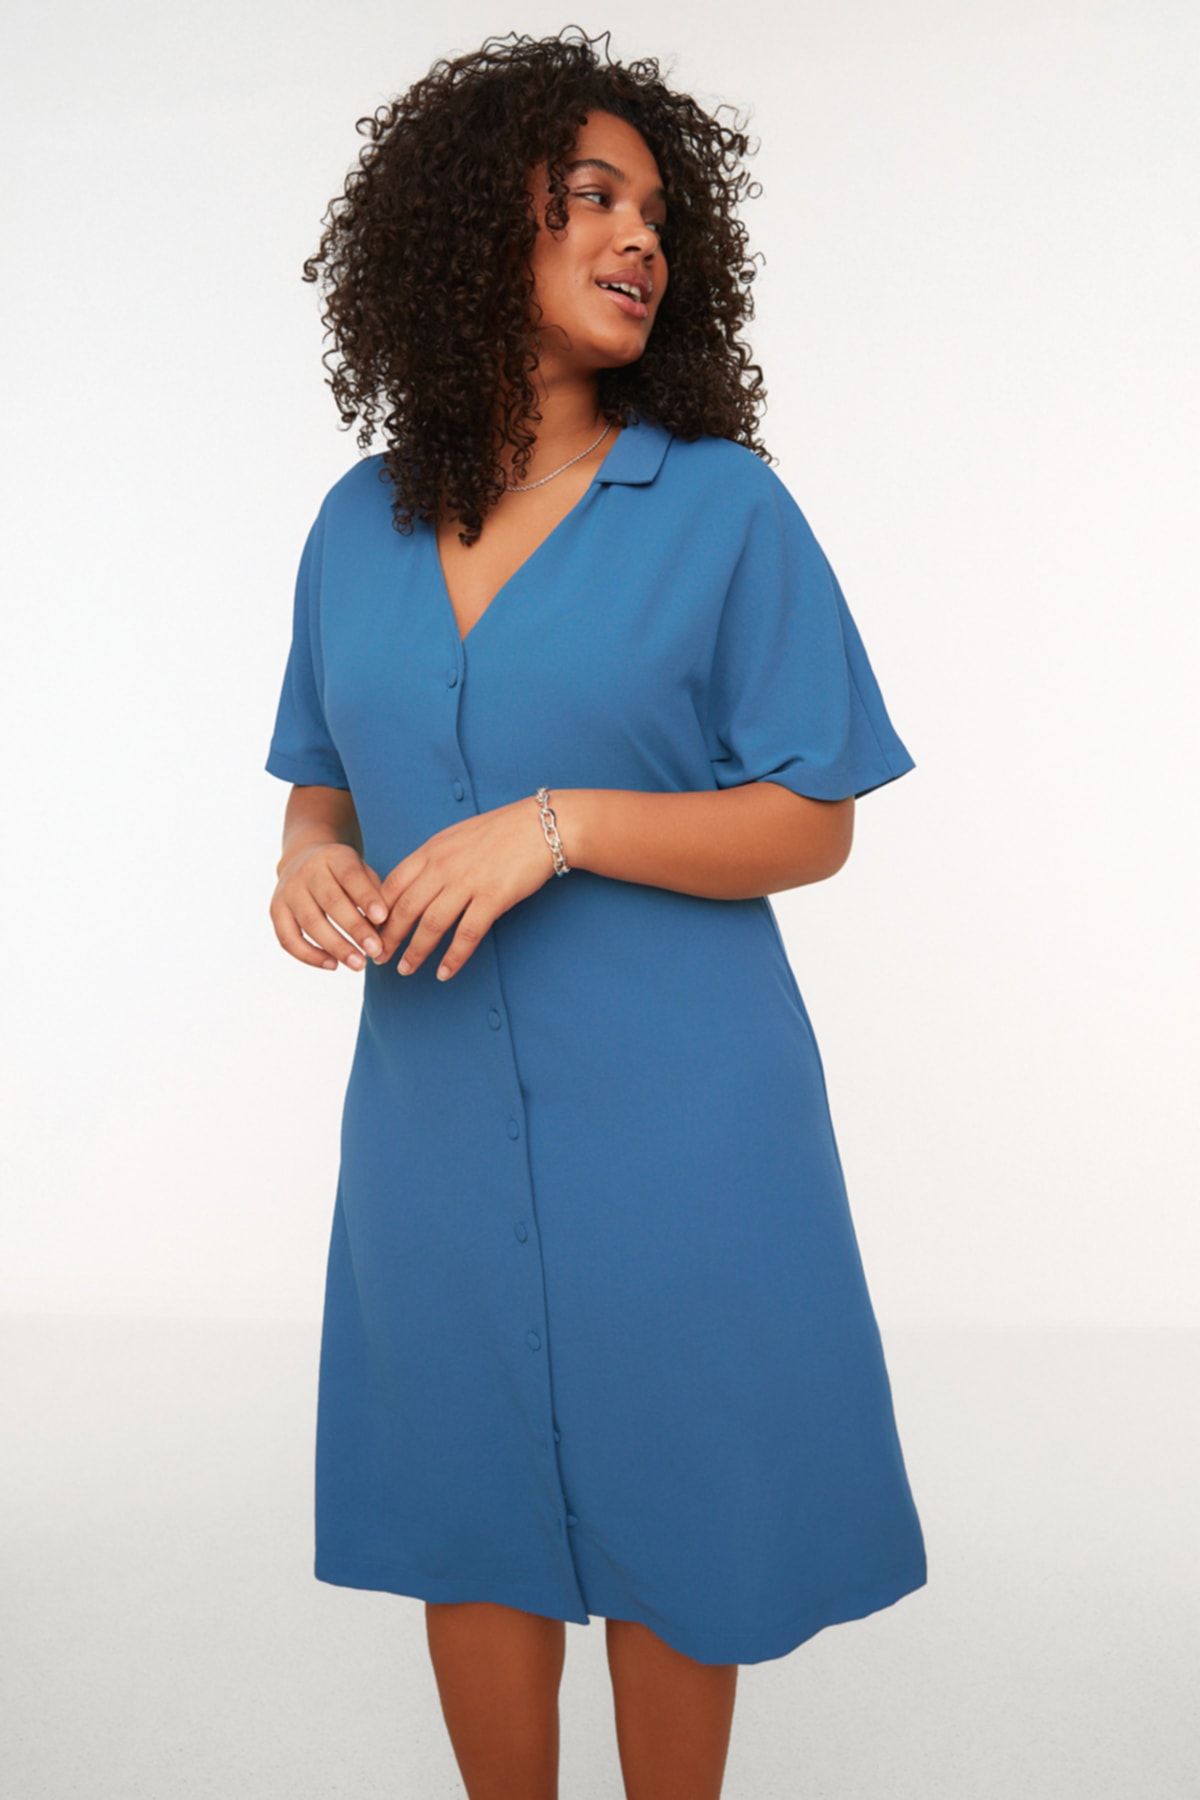 Trendyol Curve Plus Size Dress - Navy blue - Jersey dress - Trendyol